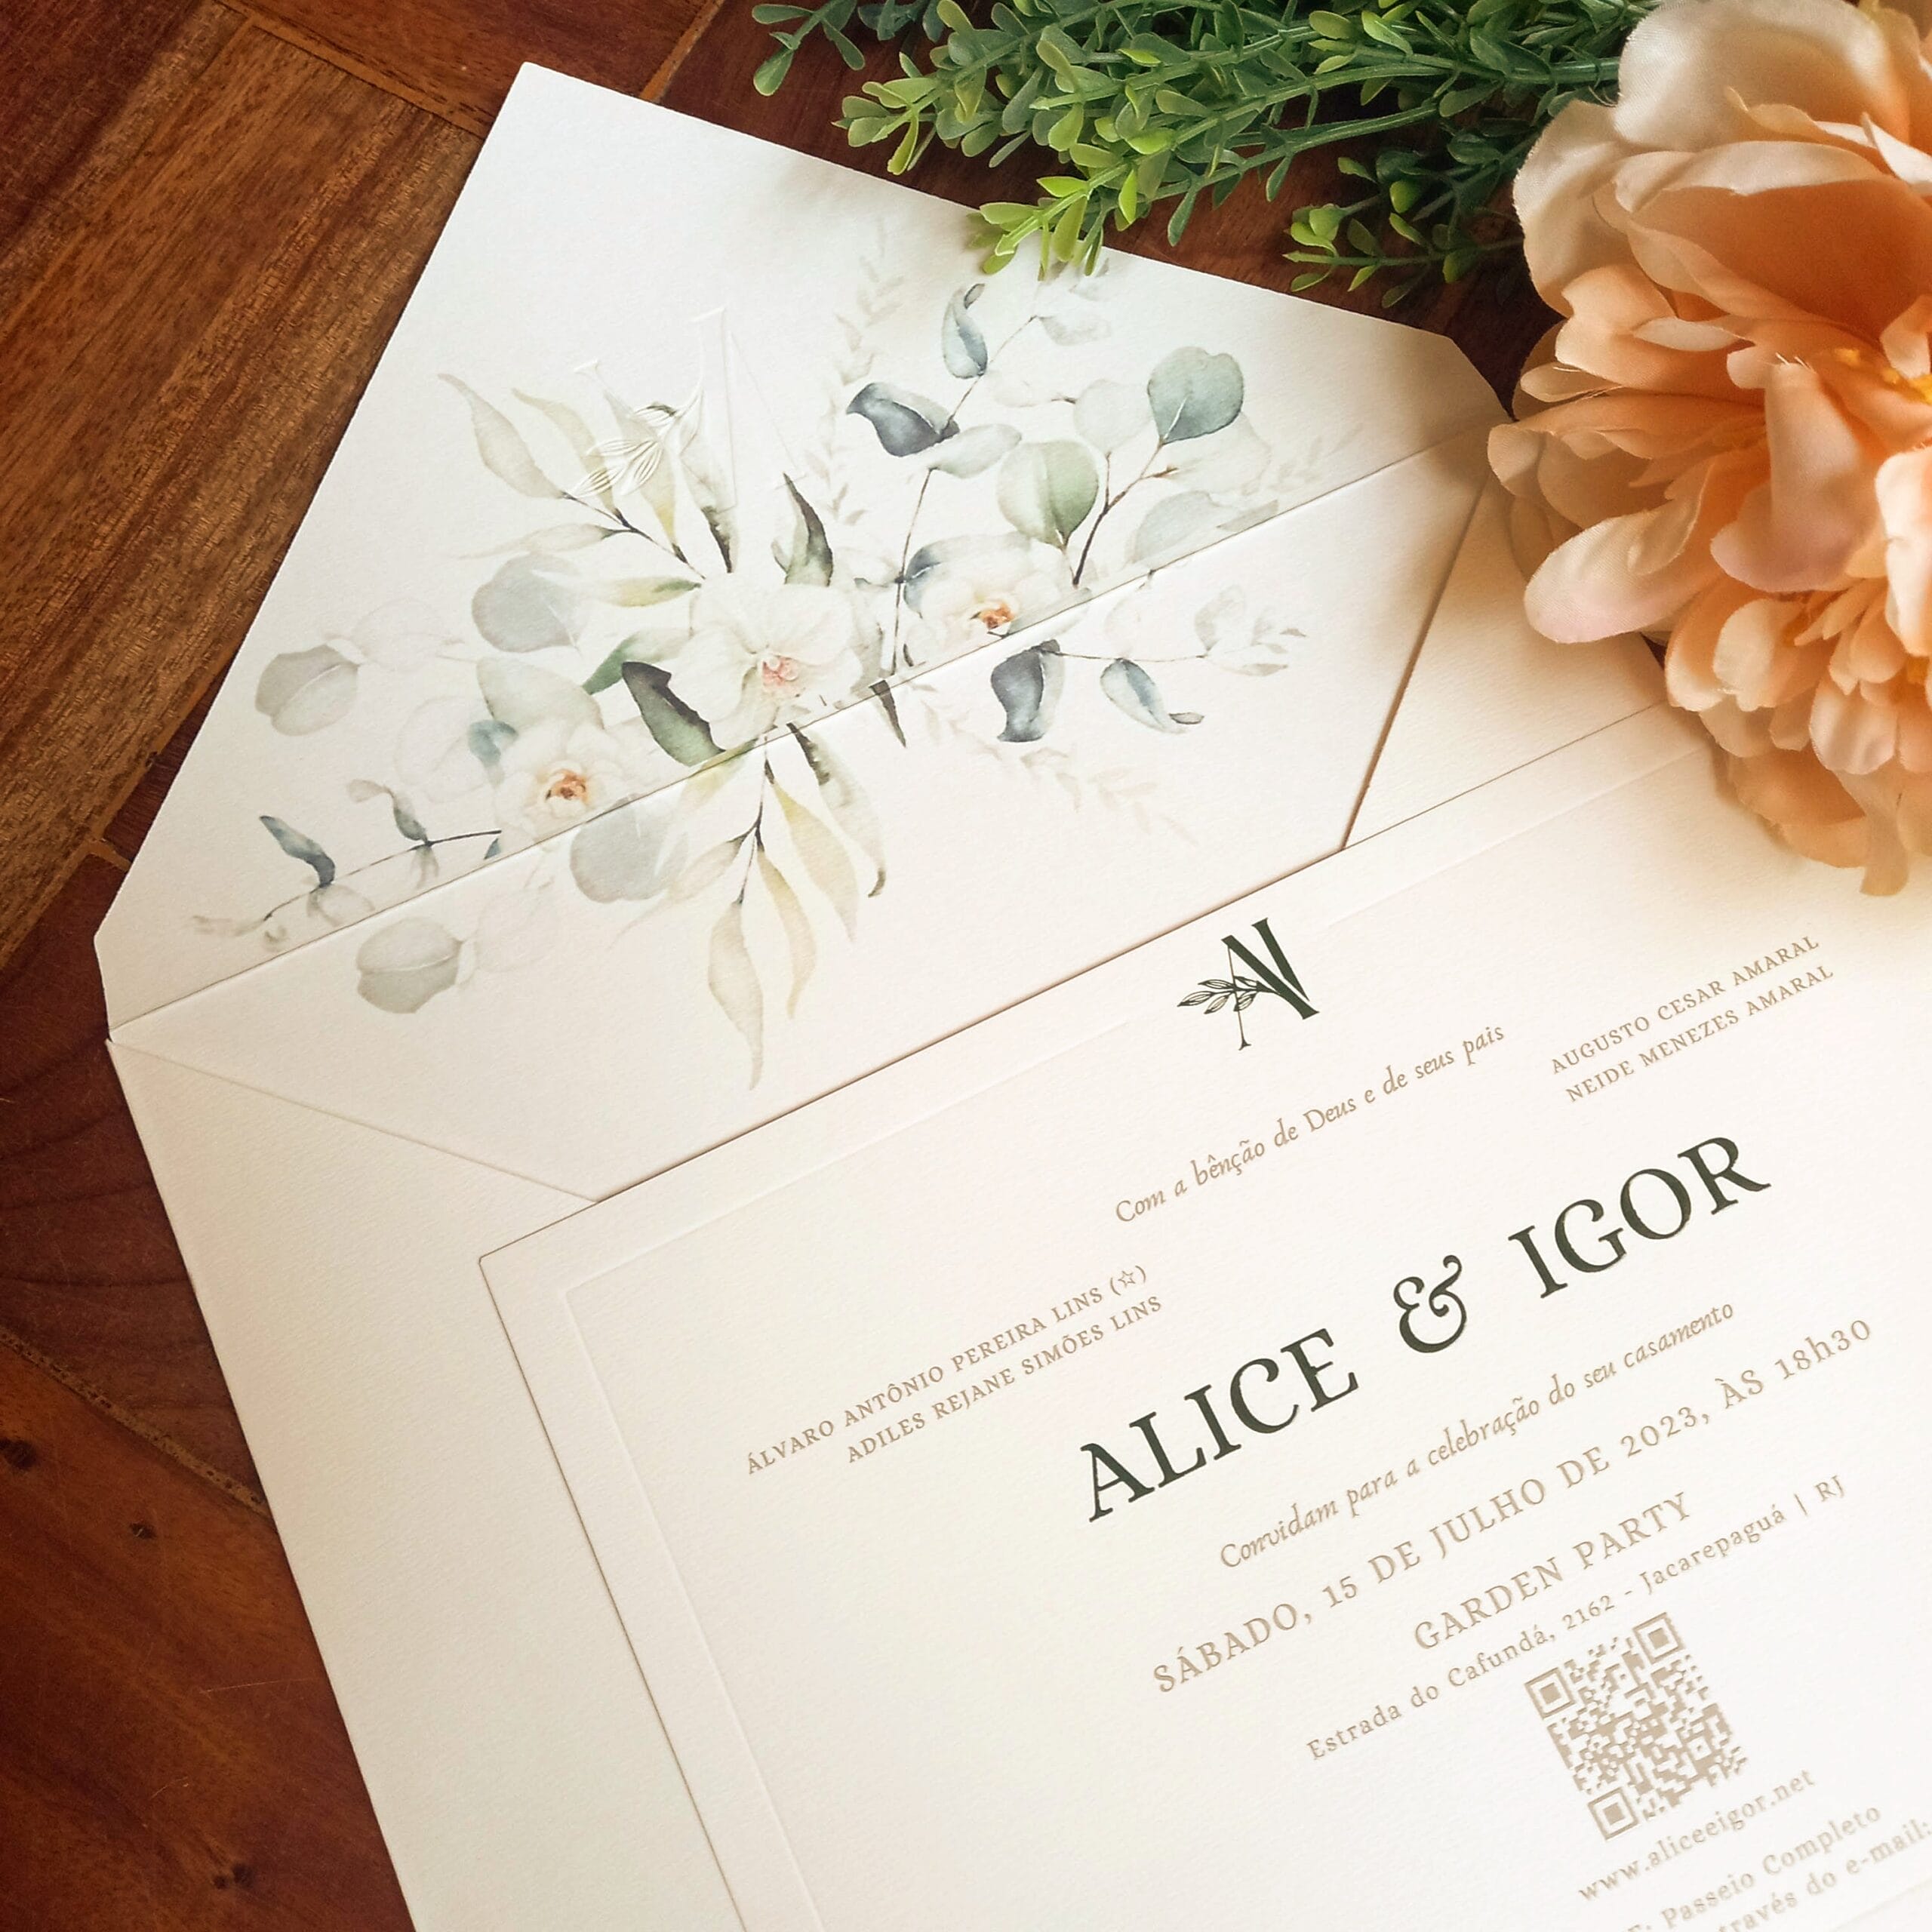 Convite de casamento clean com flores na parte interna do envelope e monograma especialmente desenvolvido para o casal.